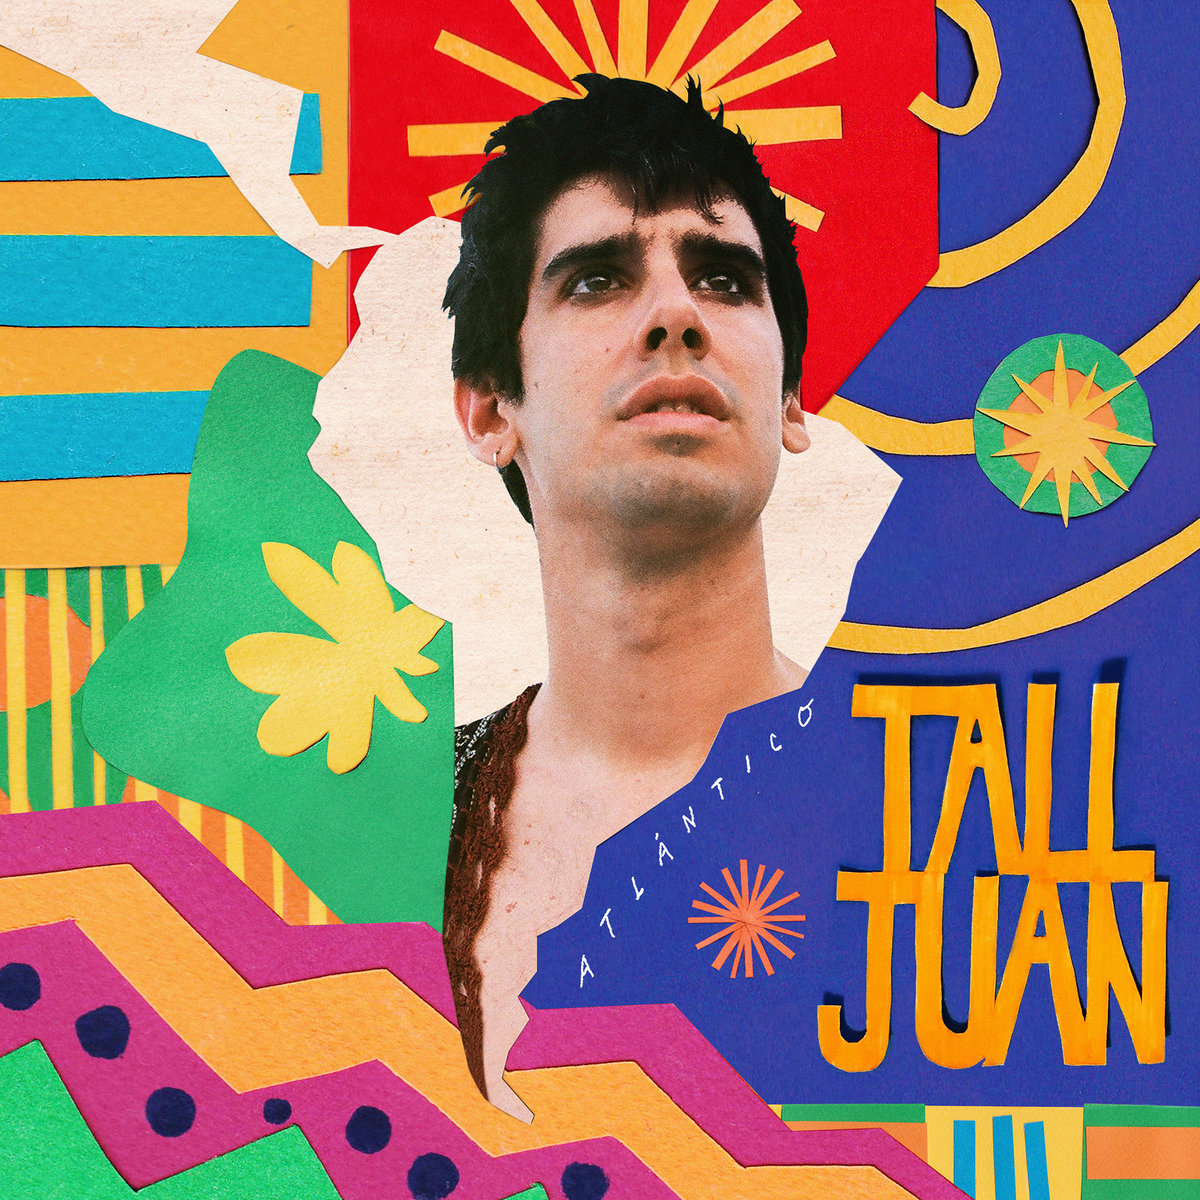 Album cover of Atlantico by Tall Juan